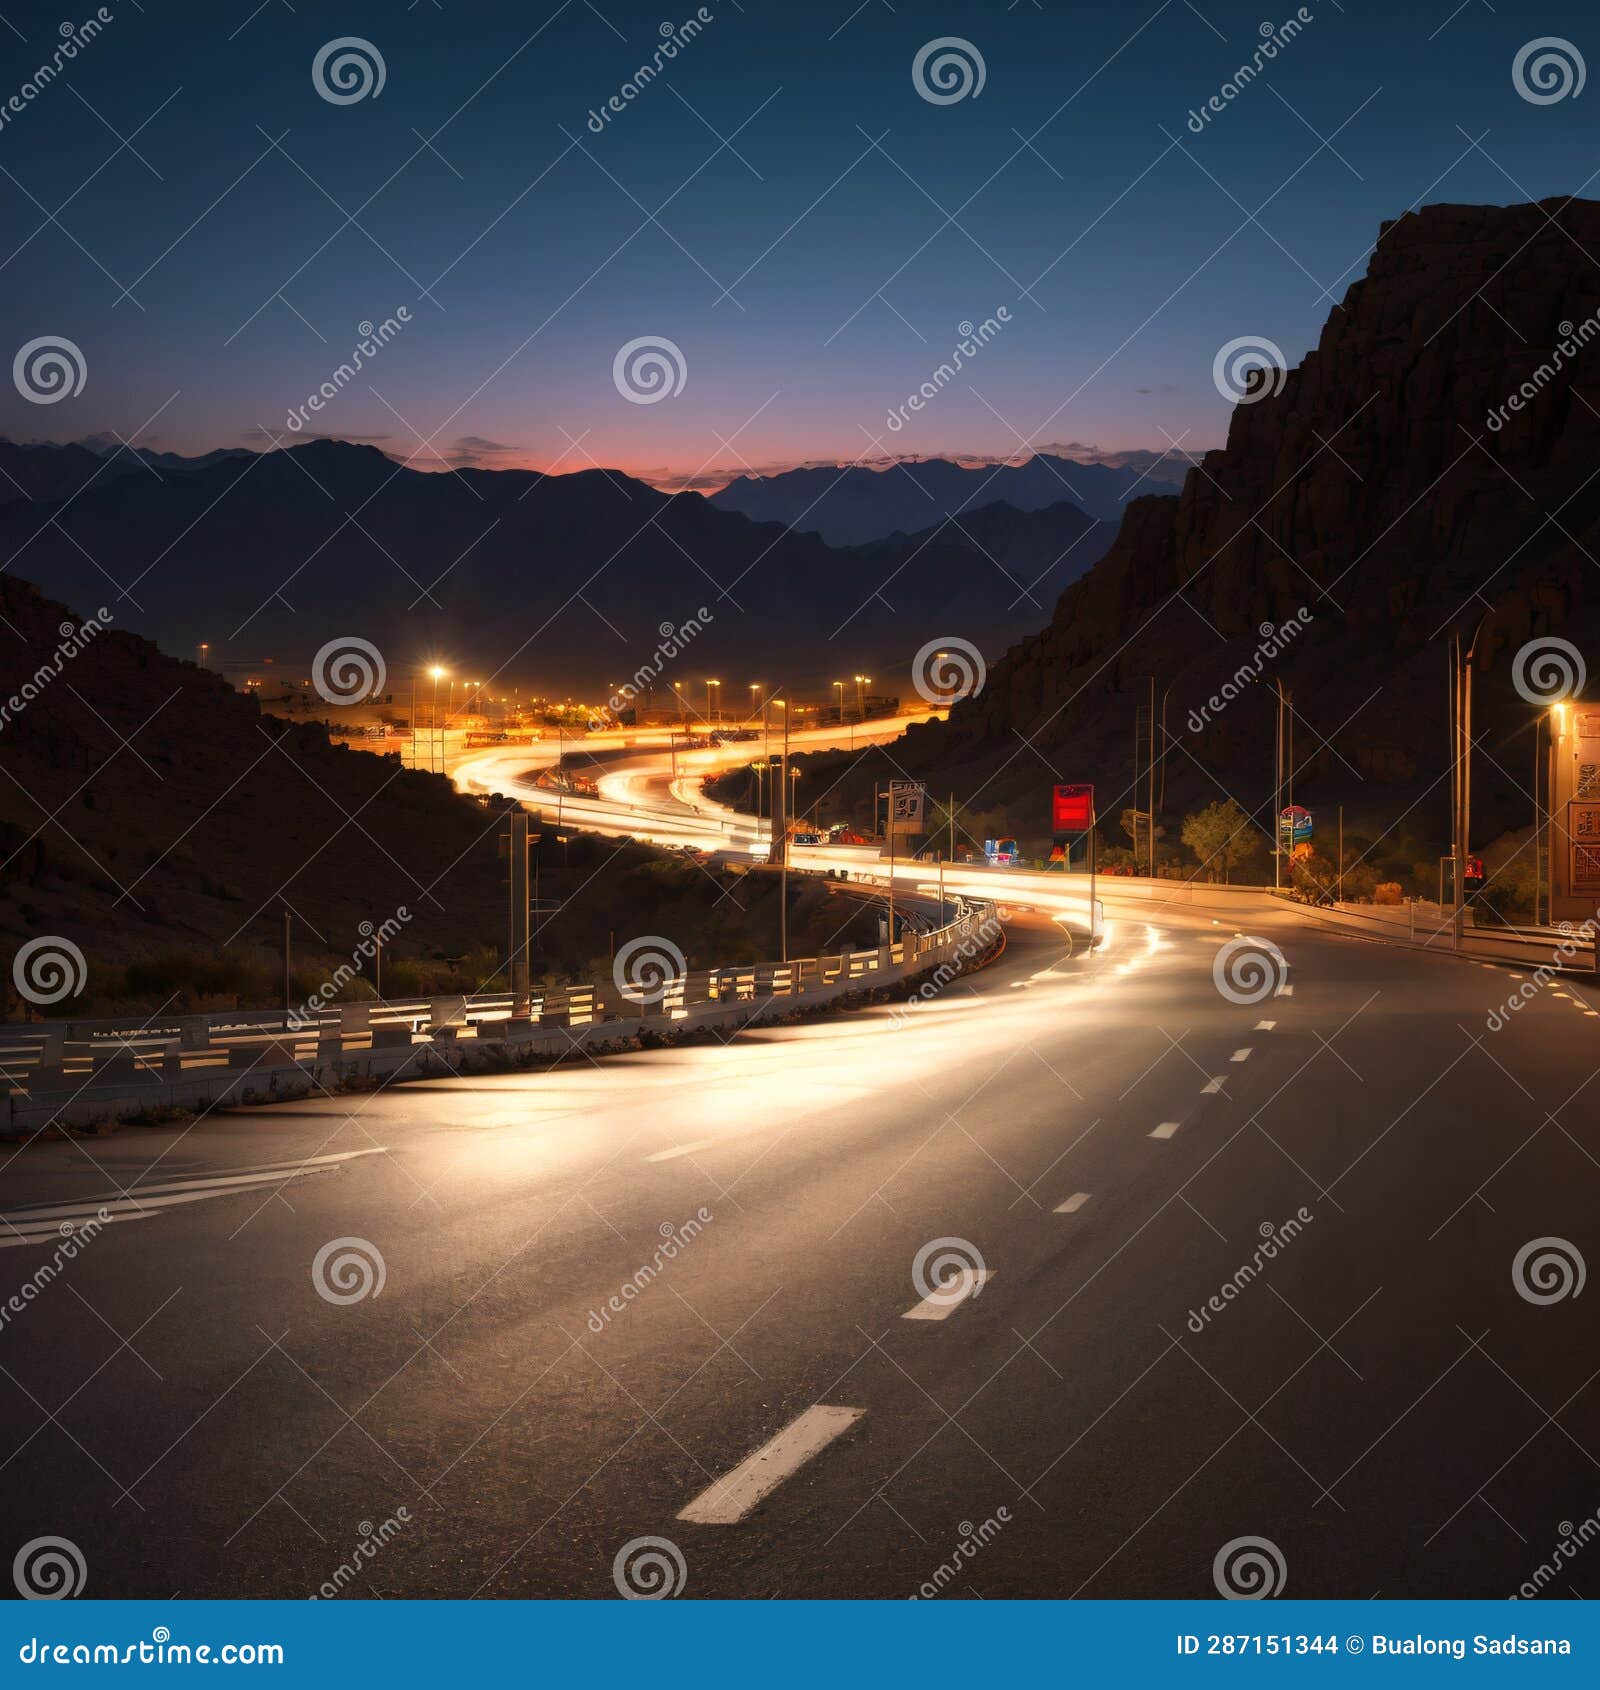 traffic light trials night photography, zig zag road al hada, taif, saudi arabia...